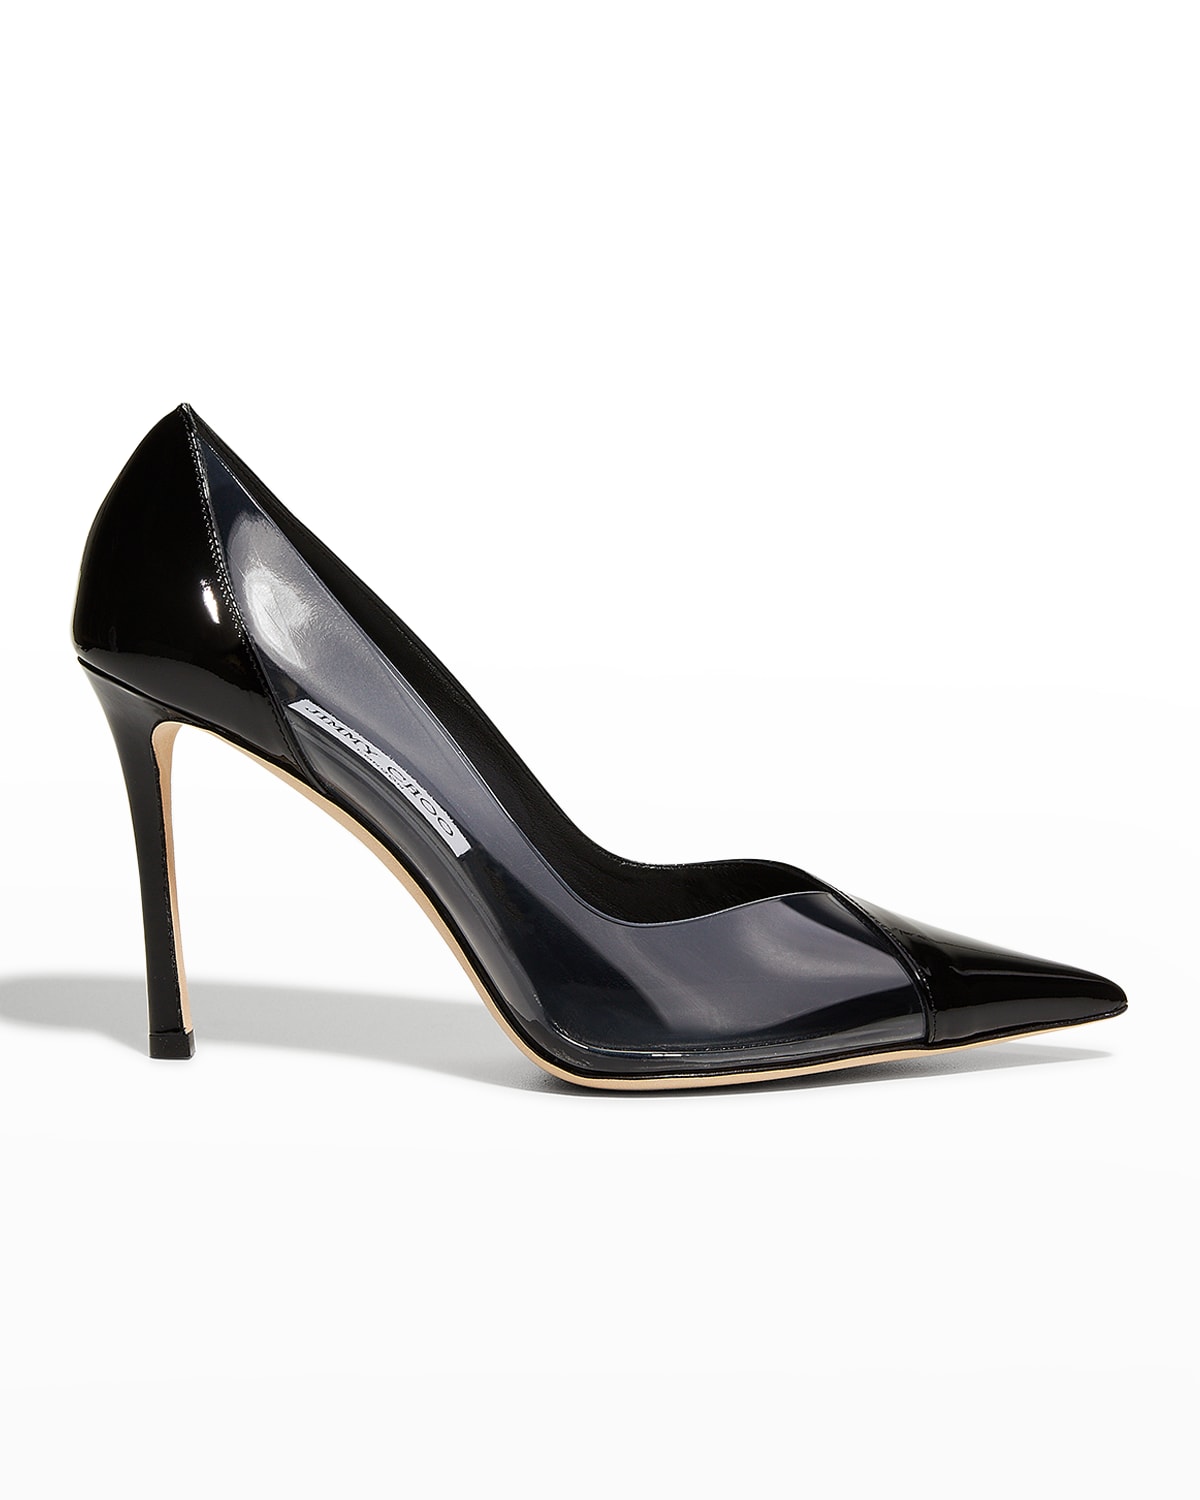 Patent Leather Pumps Women Square Toe Footwear Transparent PVC Pearl Shoes High Heels Shoes,Black,6